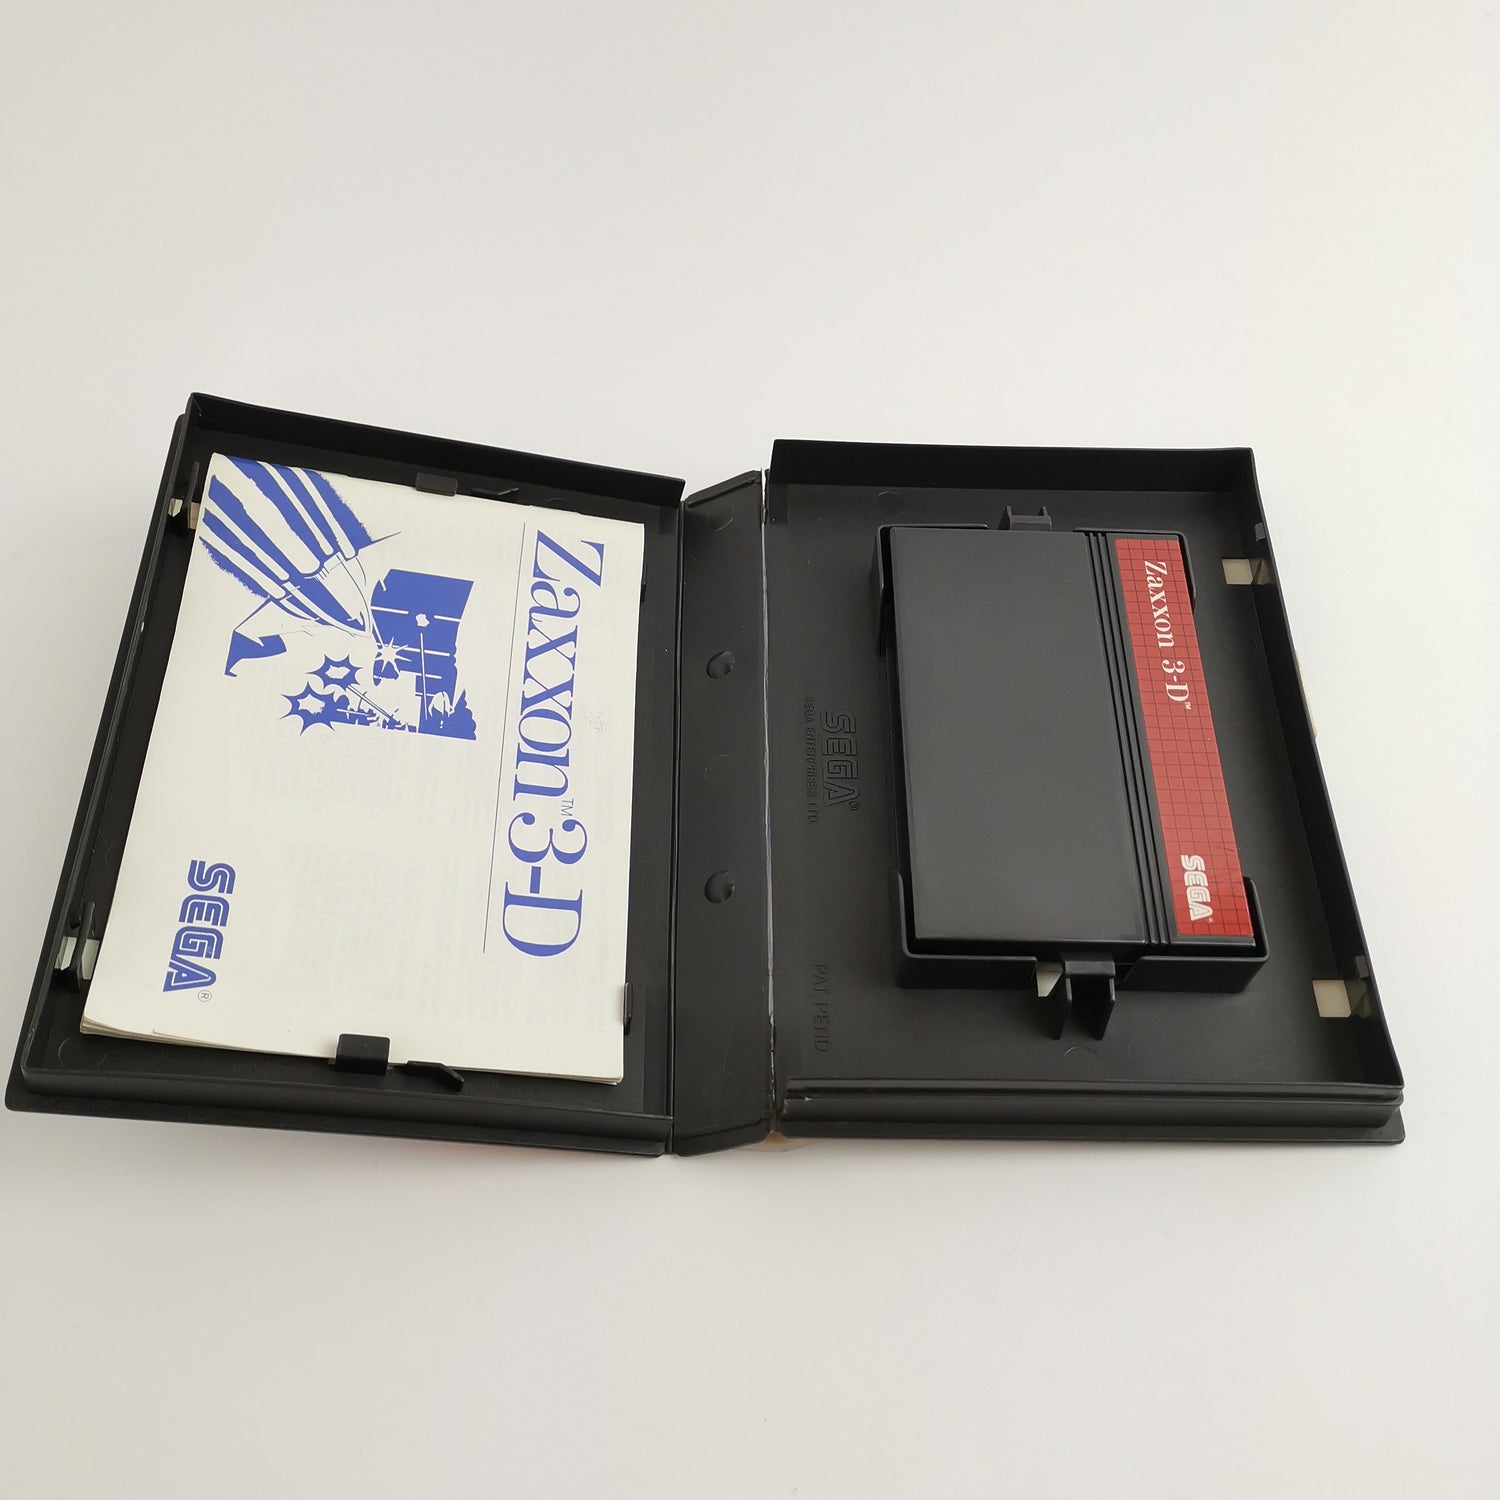 Sega Master System game: Zaxxon 3-D in original packaging | 3D Cartridge - EUR PAL Version